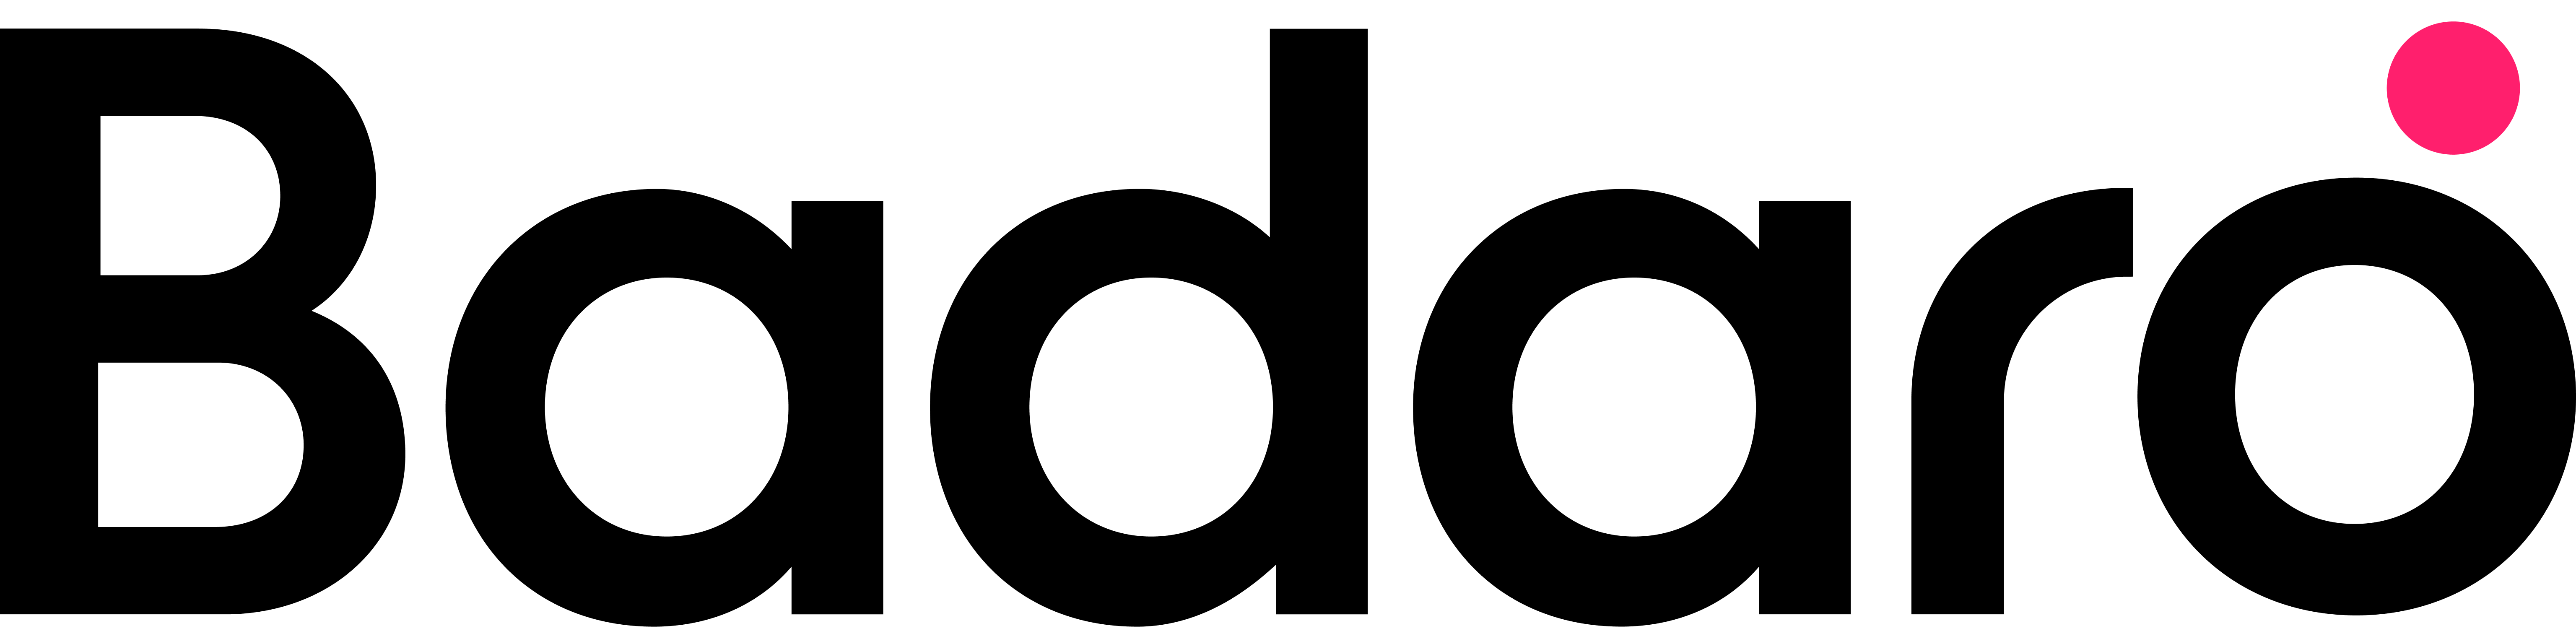 Logomarca 1620.png